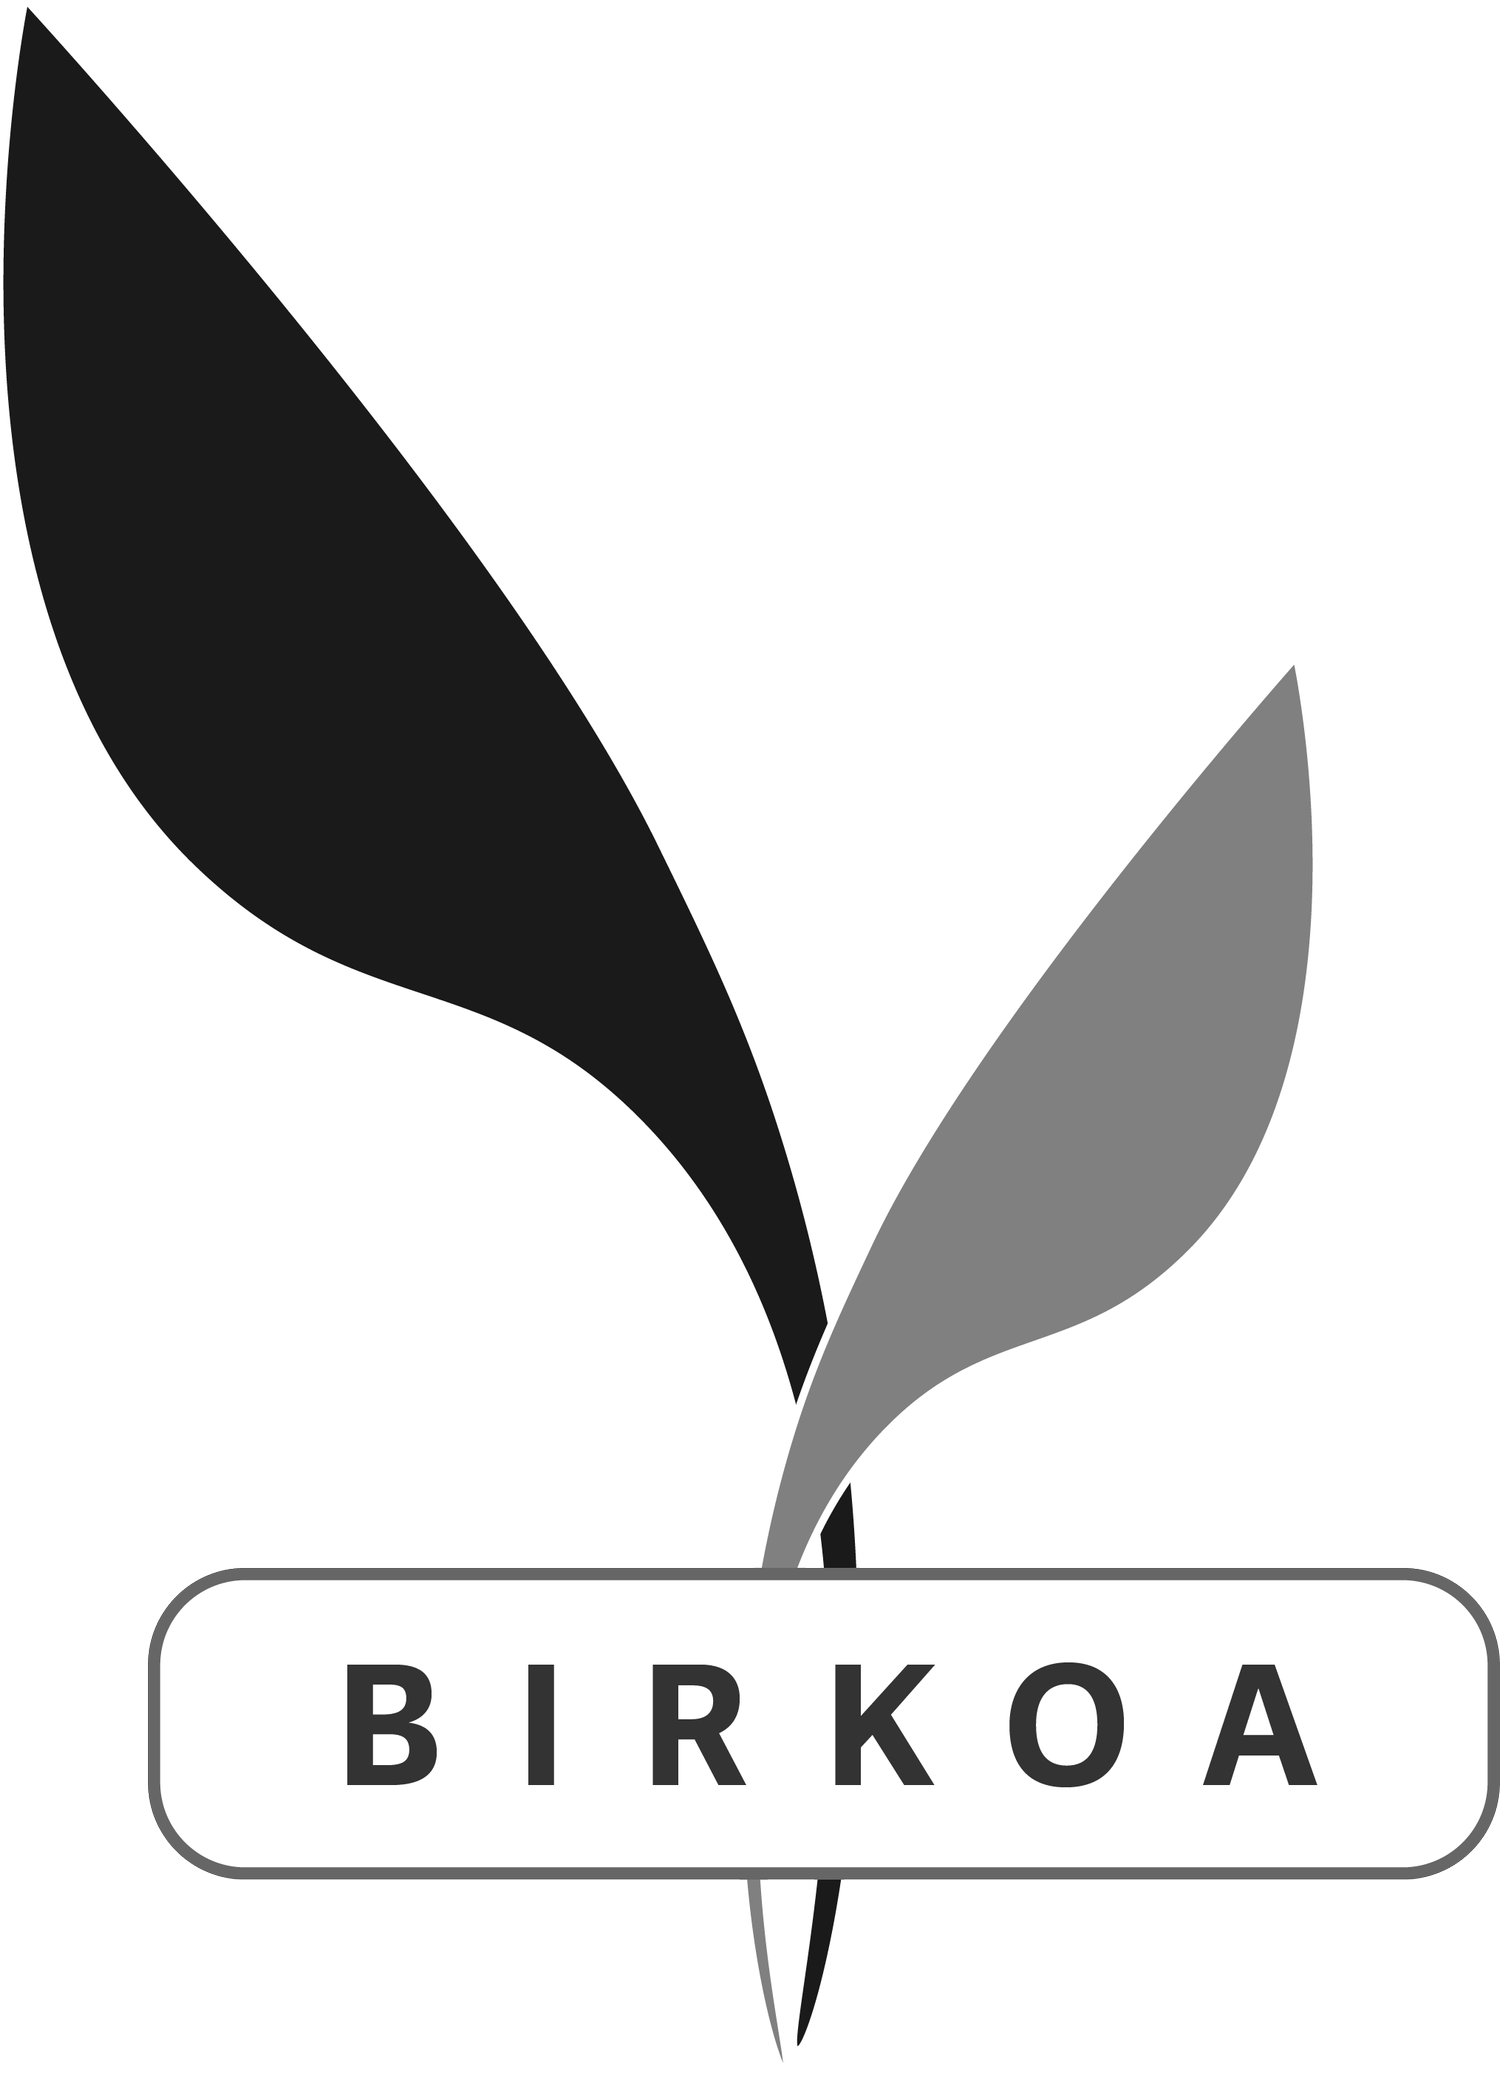 Birkoa Capital Management, LLC